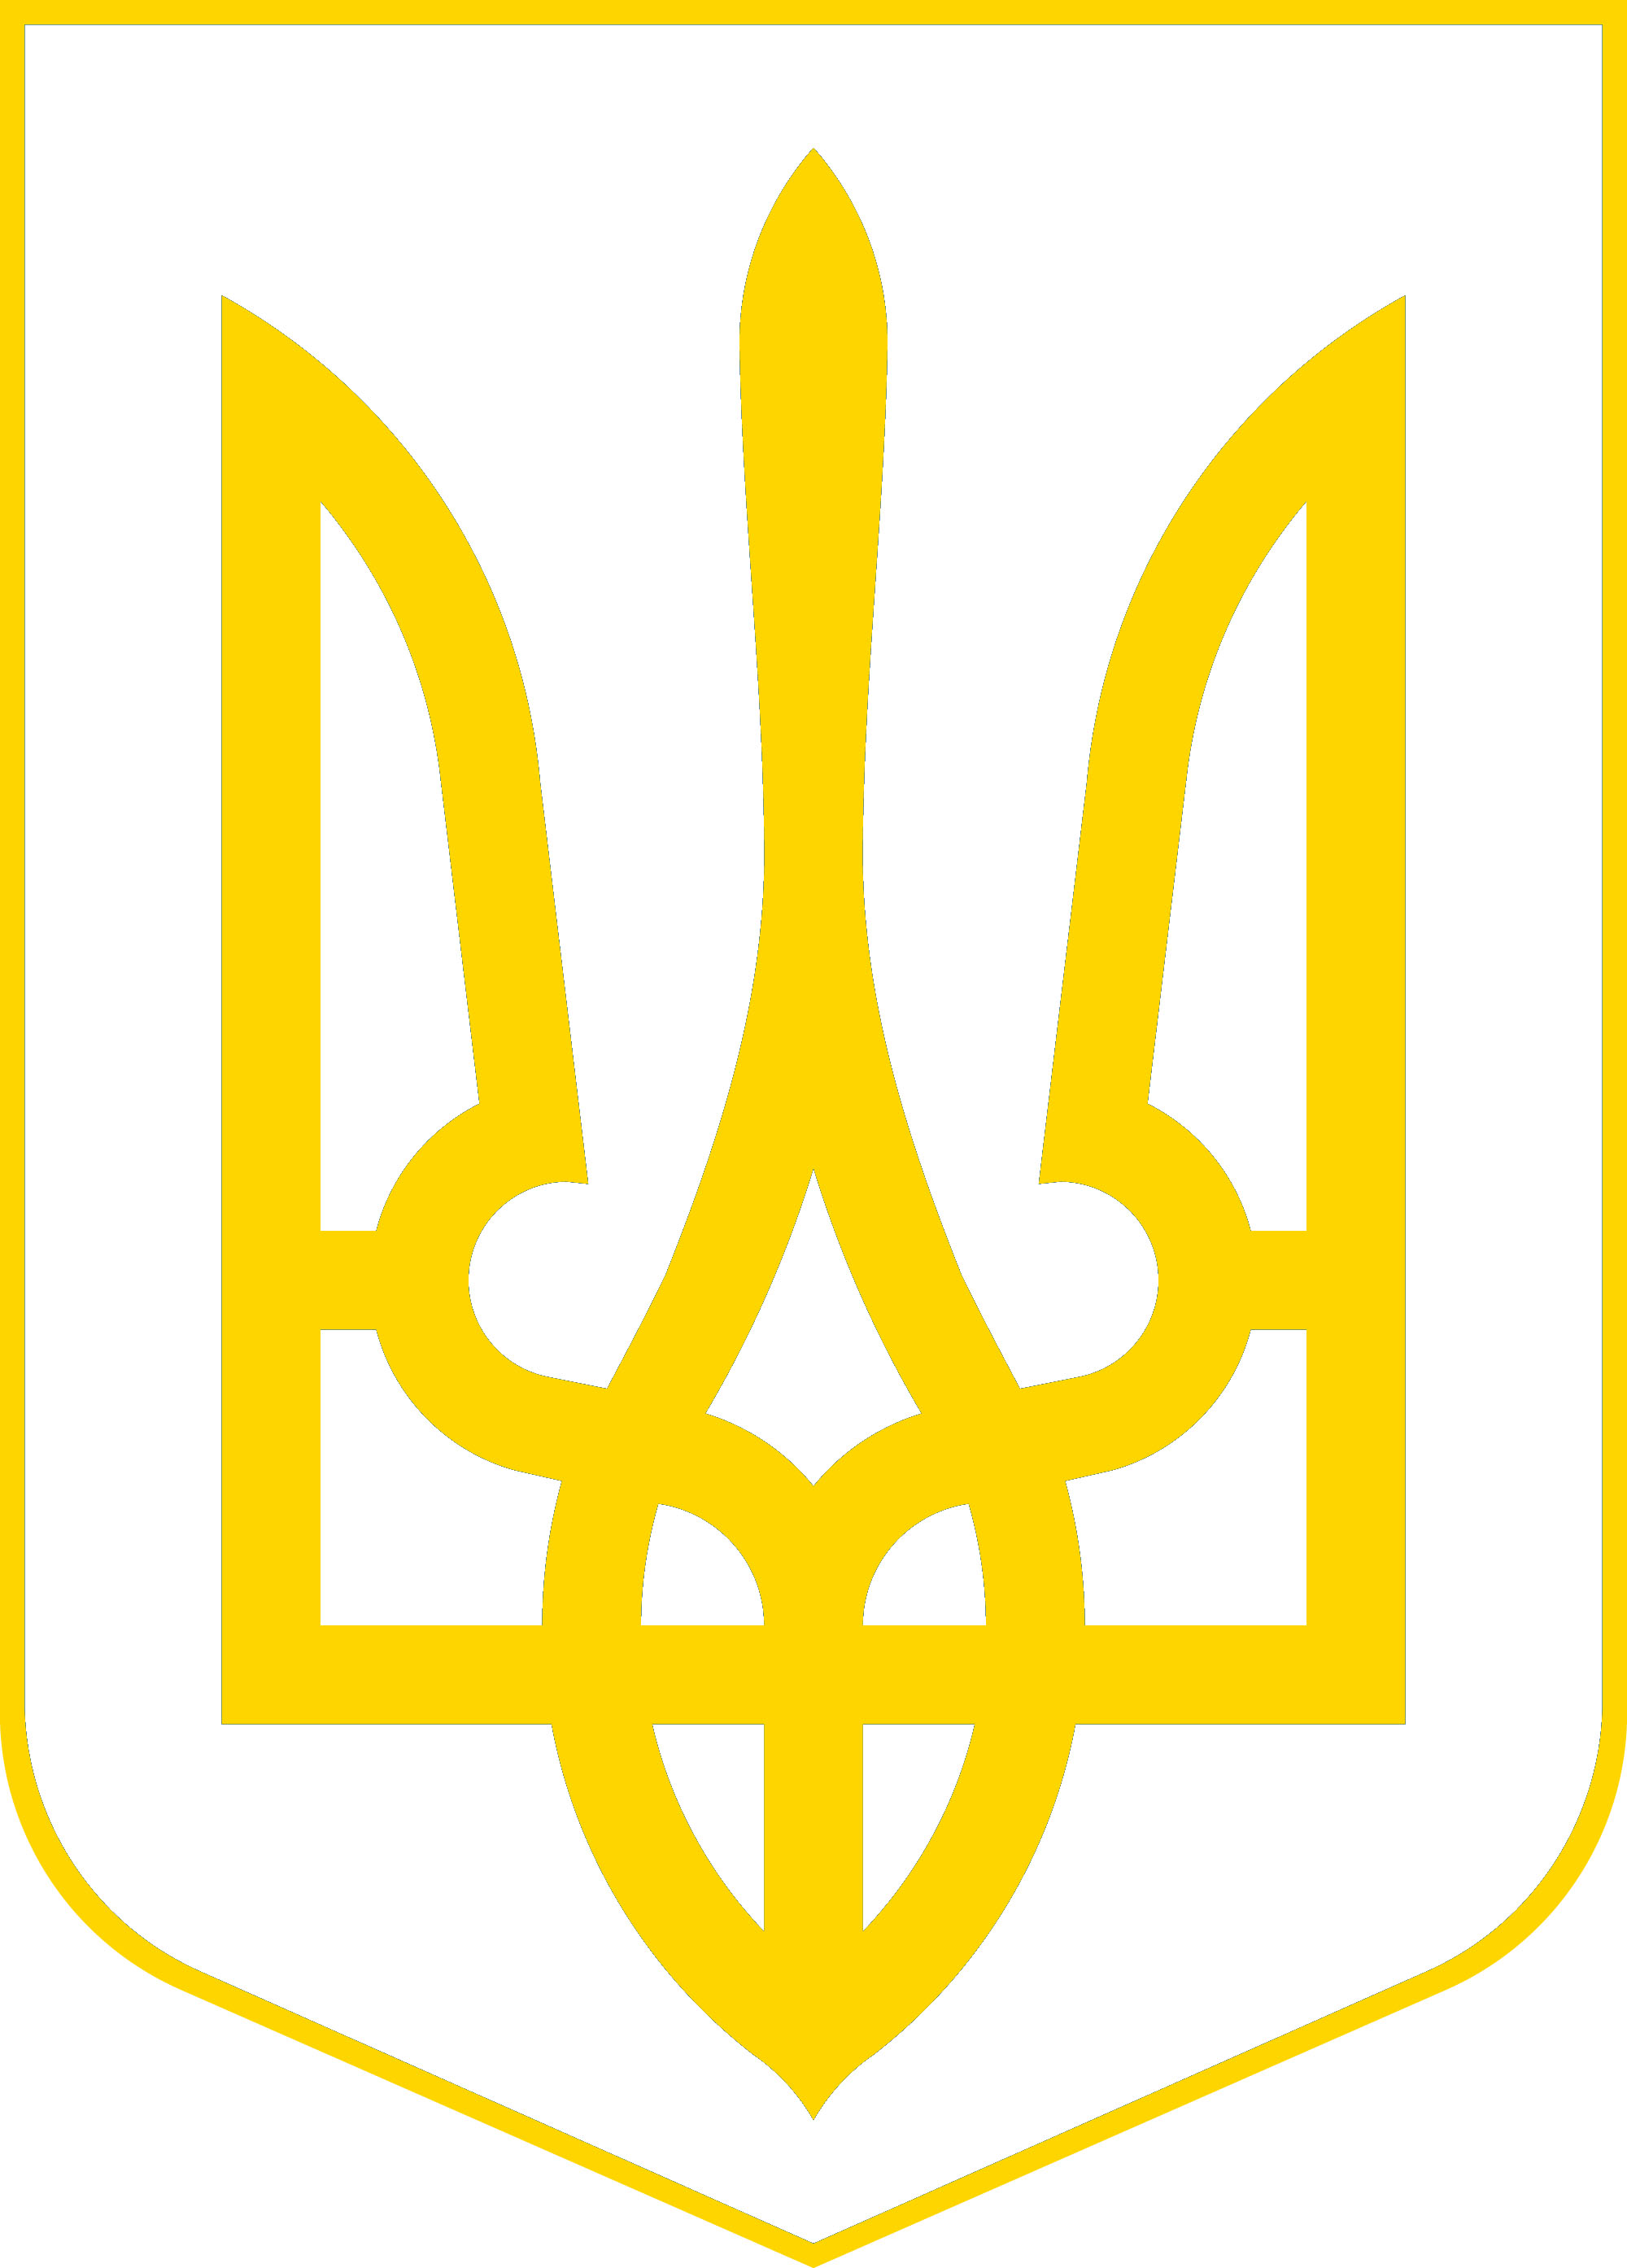 Ukraine Tryzub -Ukrainian hoodies,t-shirts,woment t-shirts,tank tops,shorts